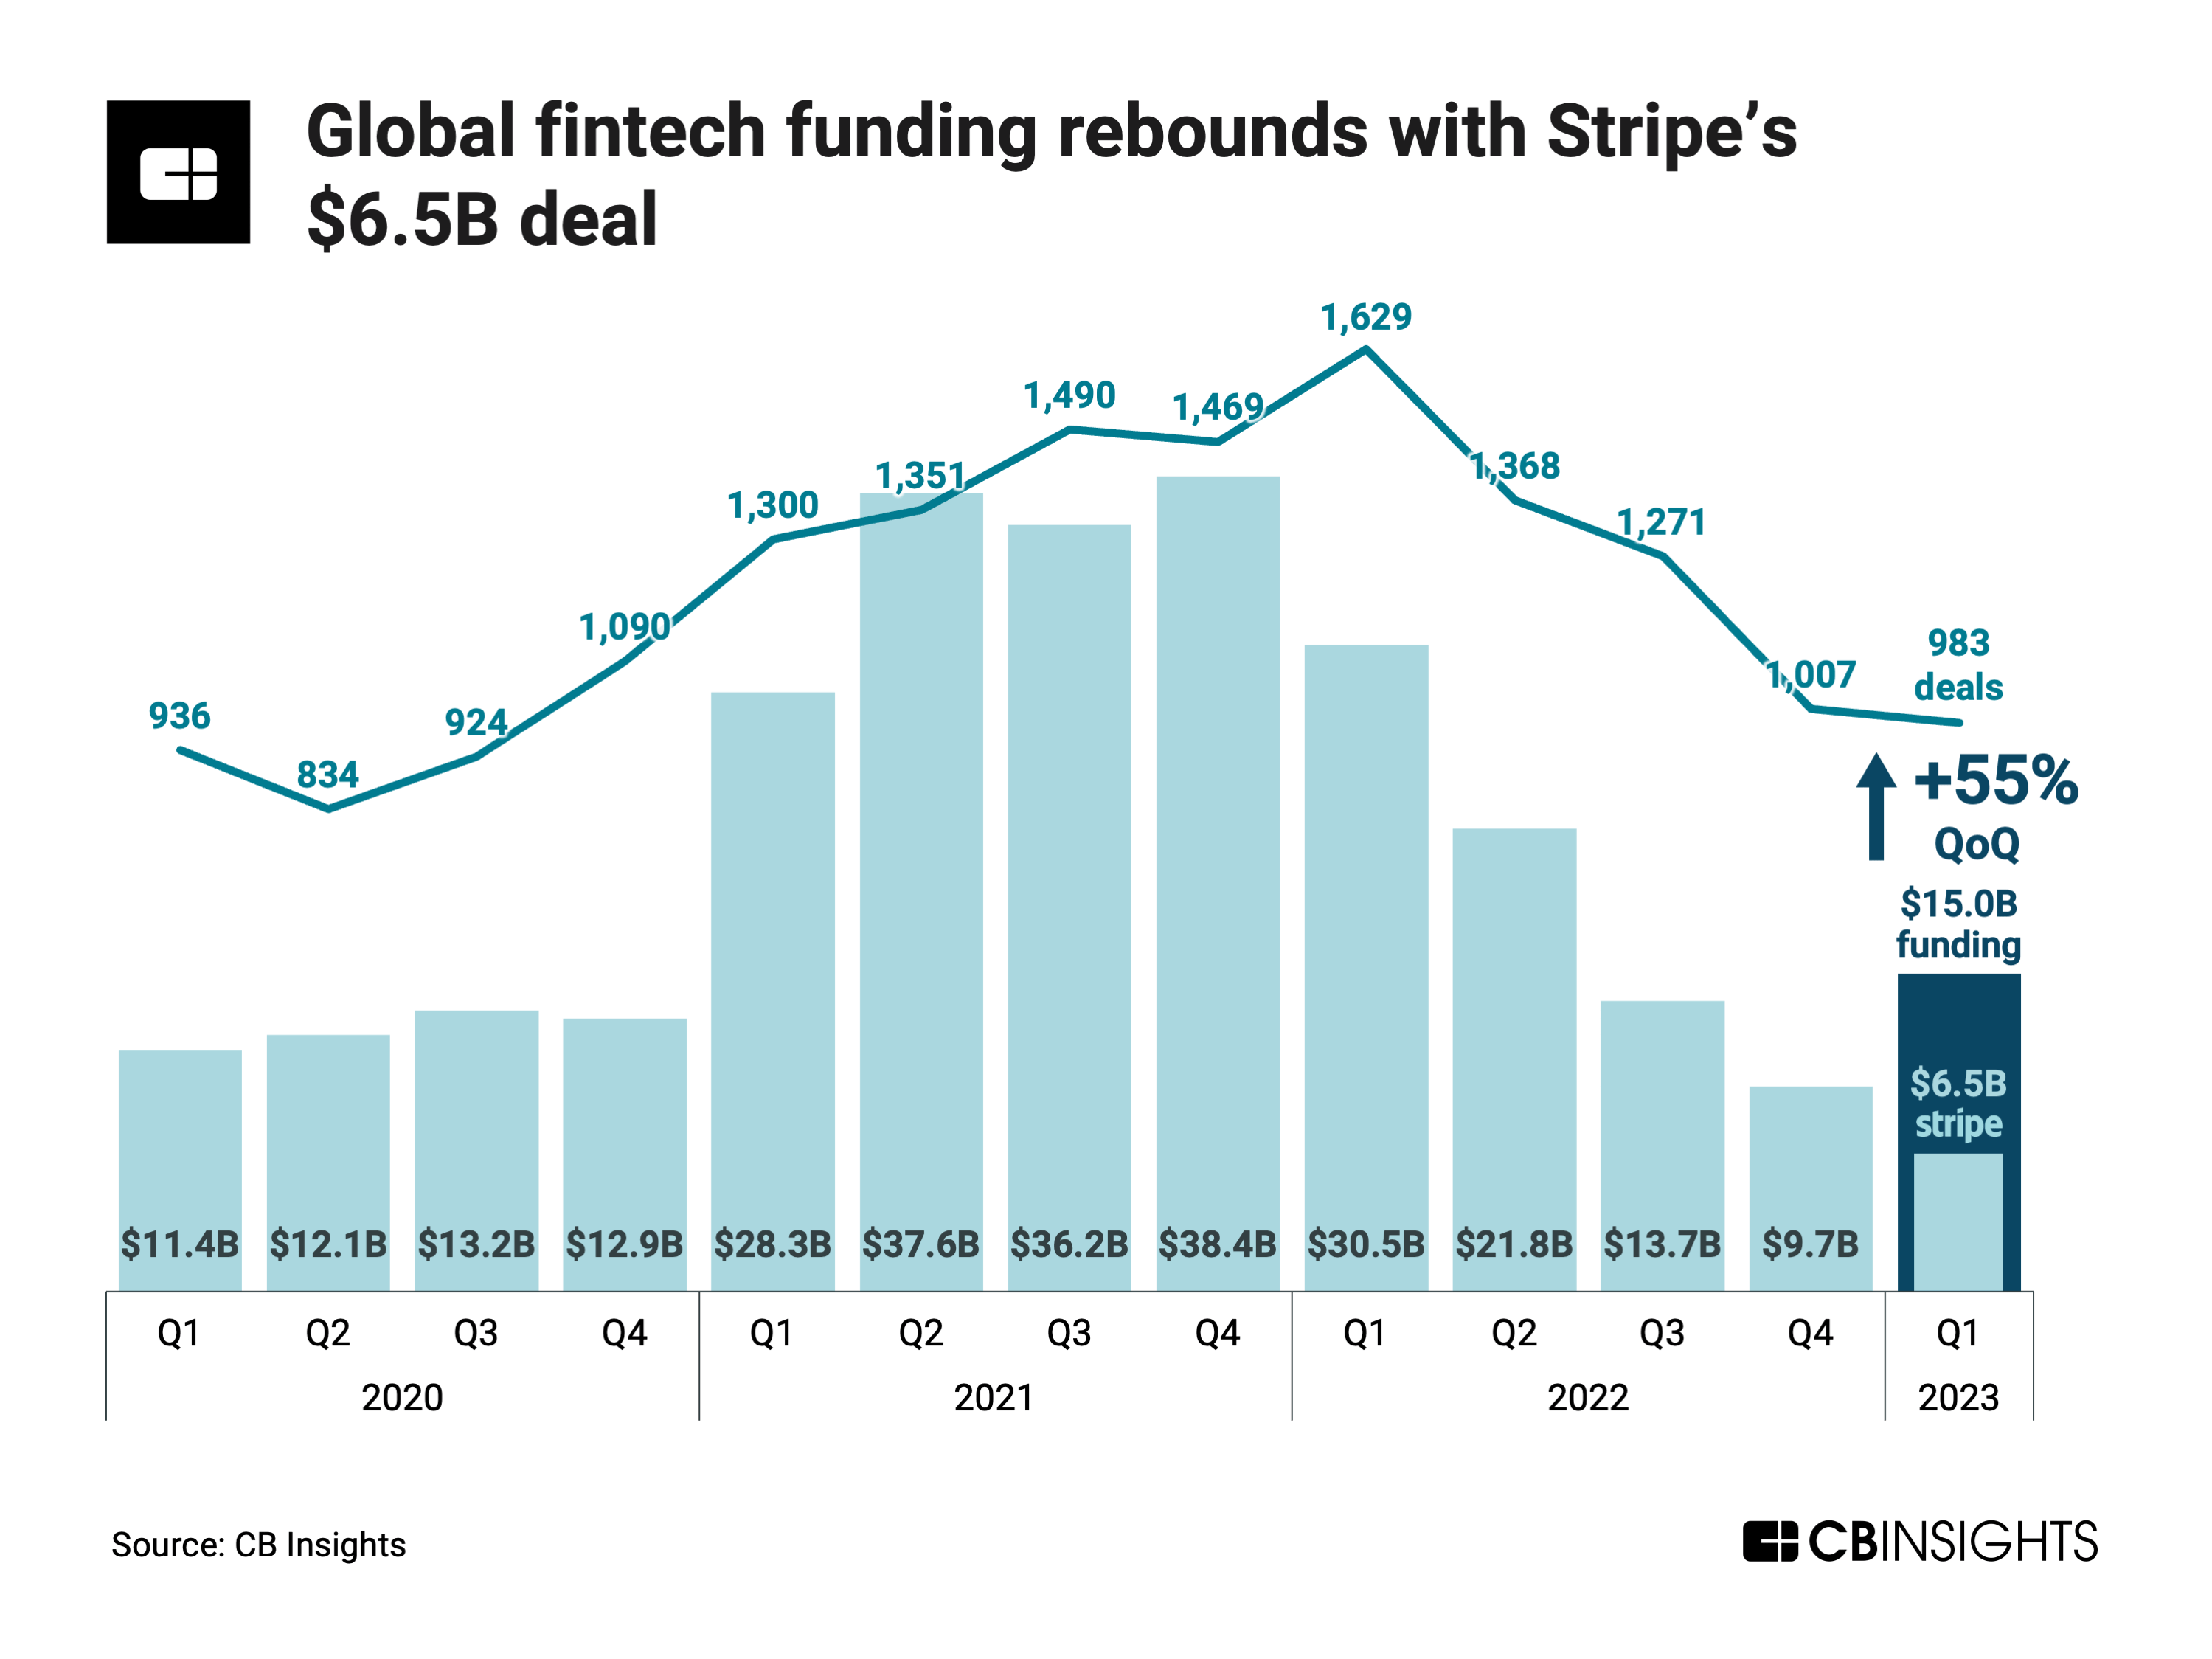 Stripe funding round boosts global fintech funding 55%